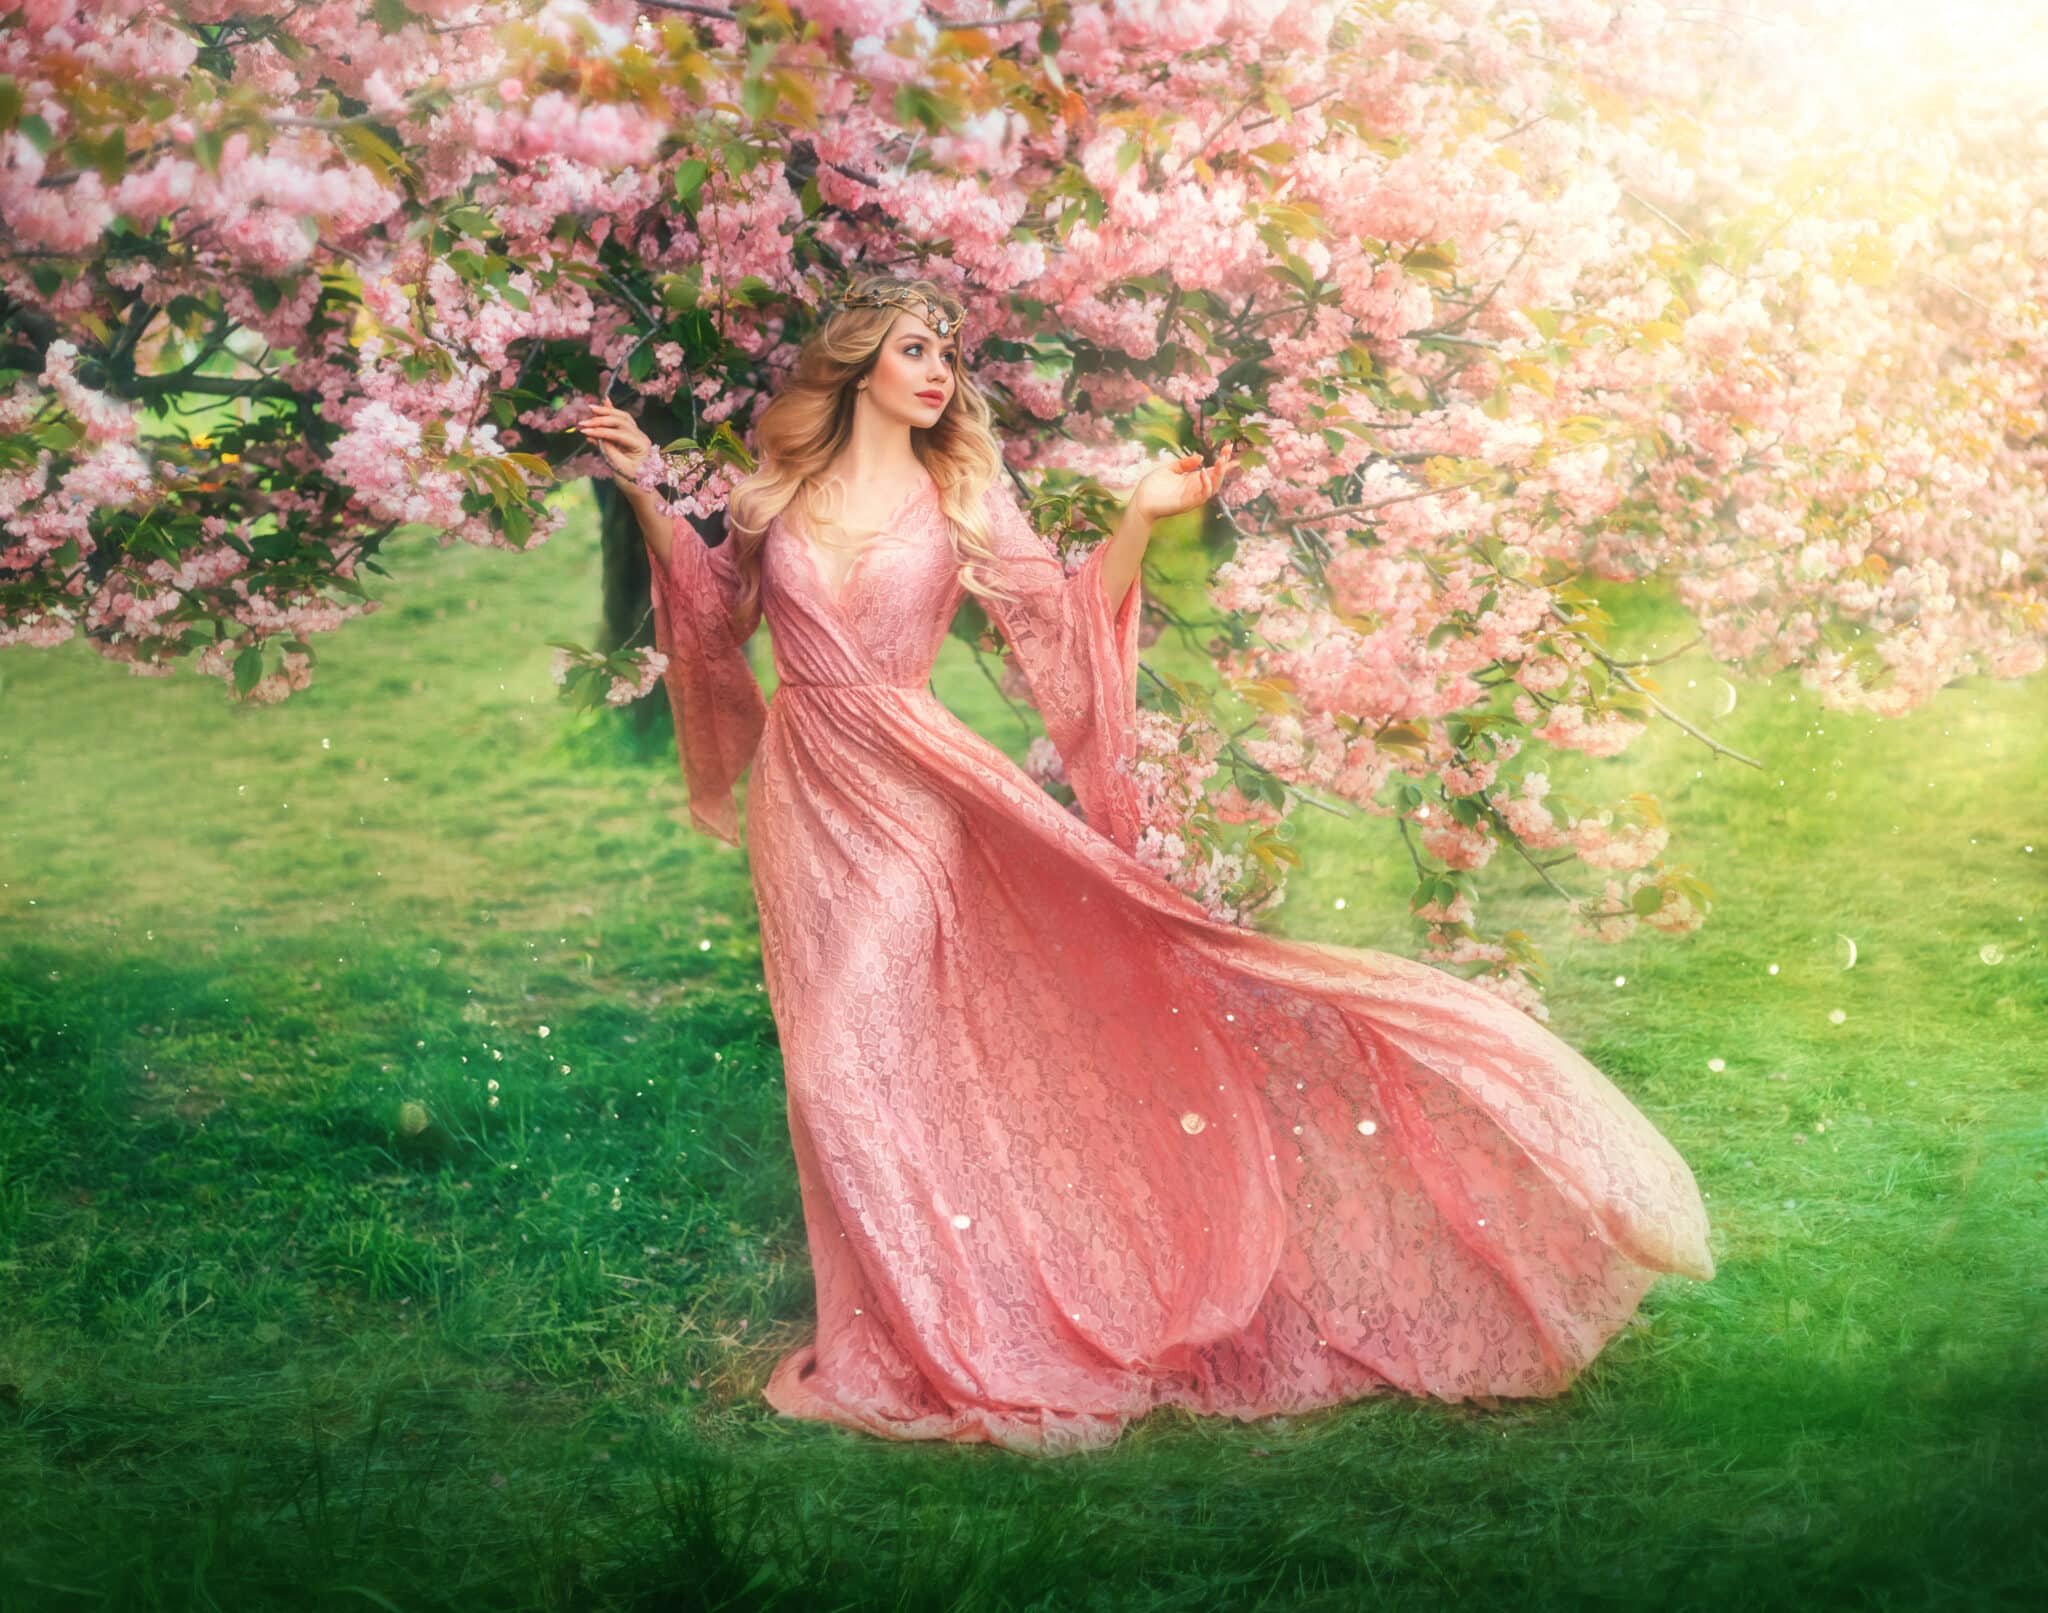 hapy girl elf princess walks in spring blooming garden